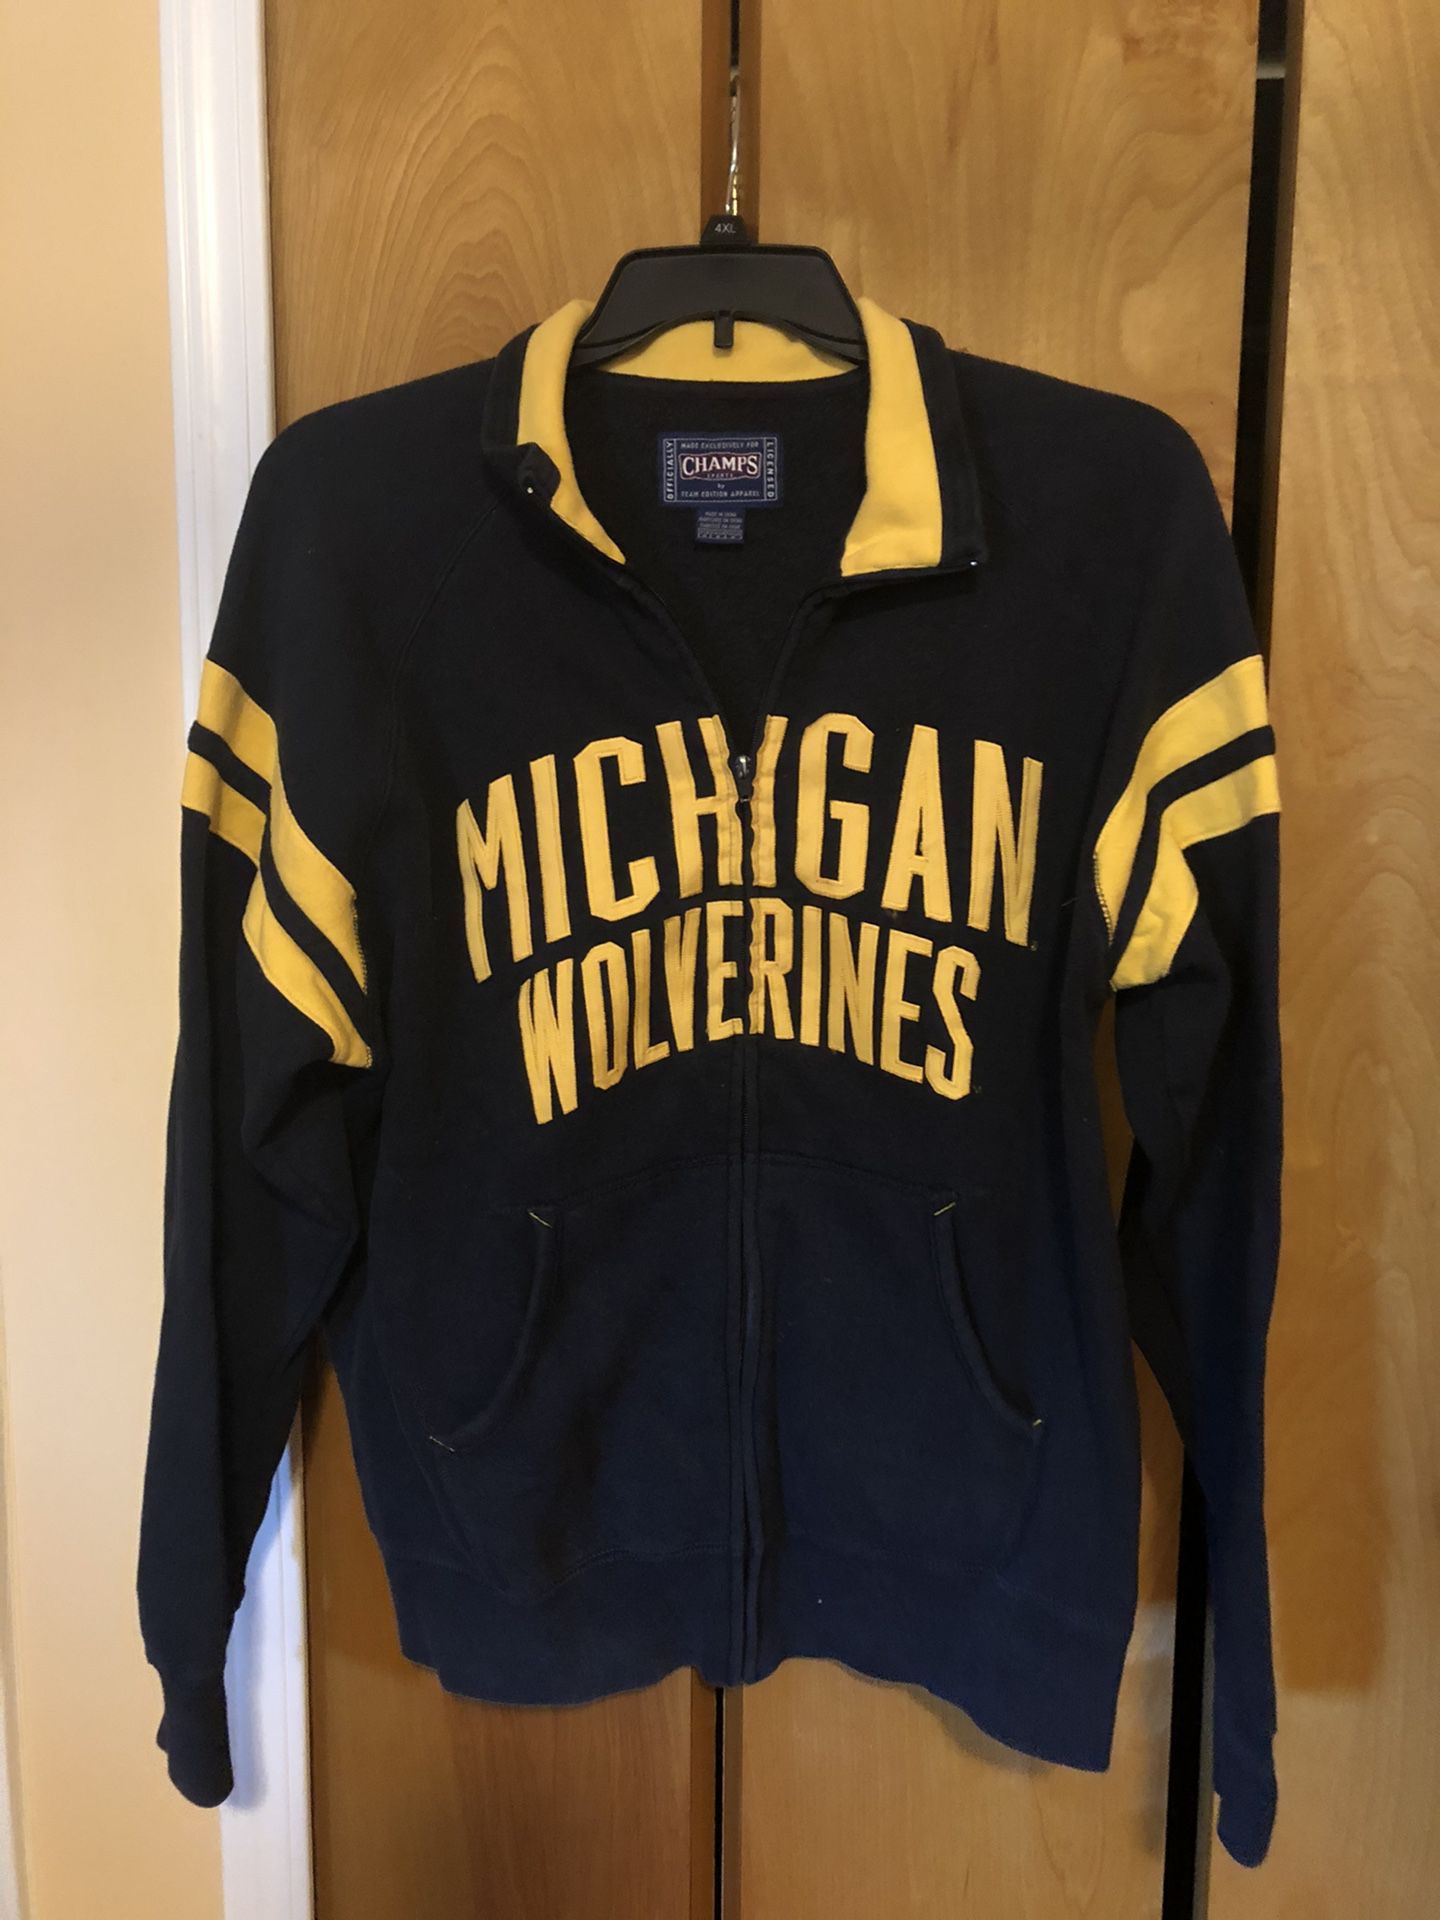 Men’s size medium Michigan zip up cotton jacket